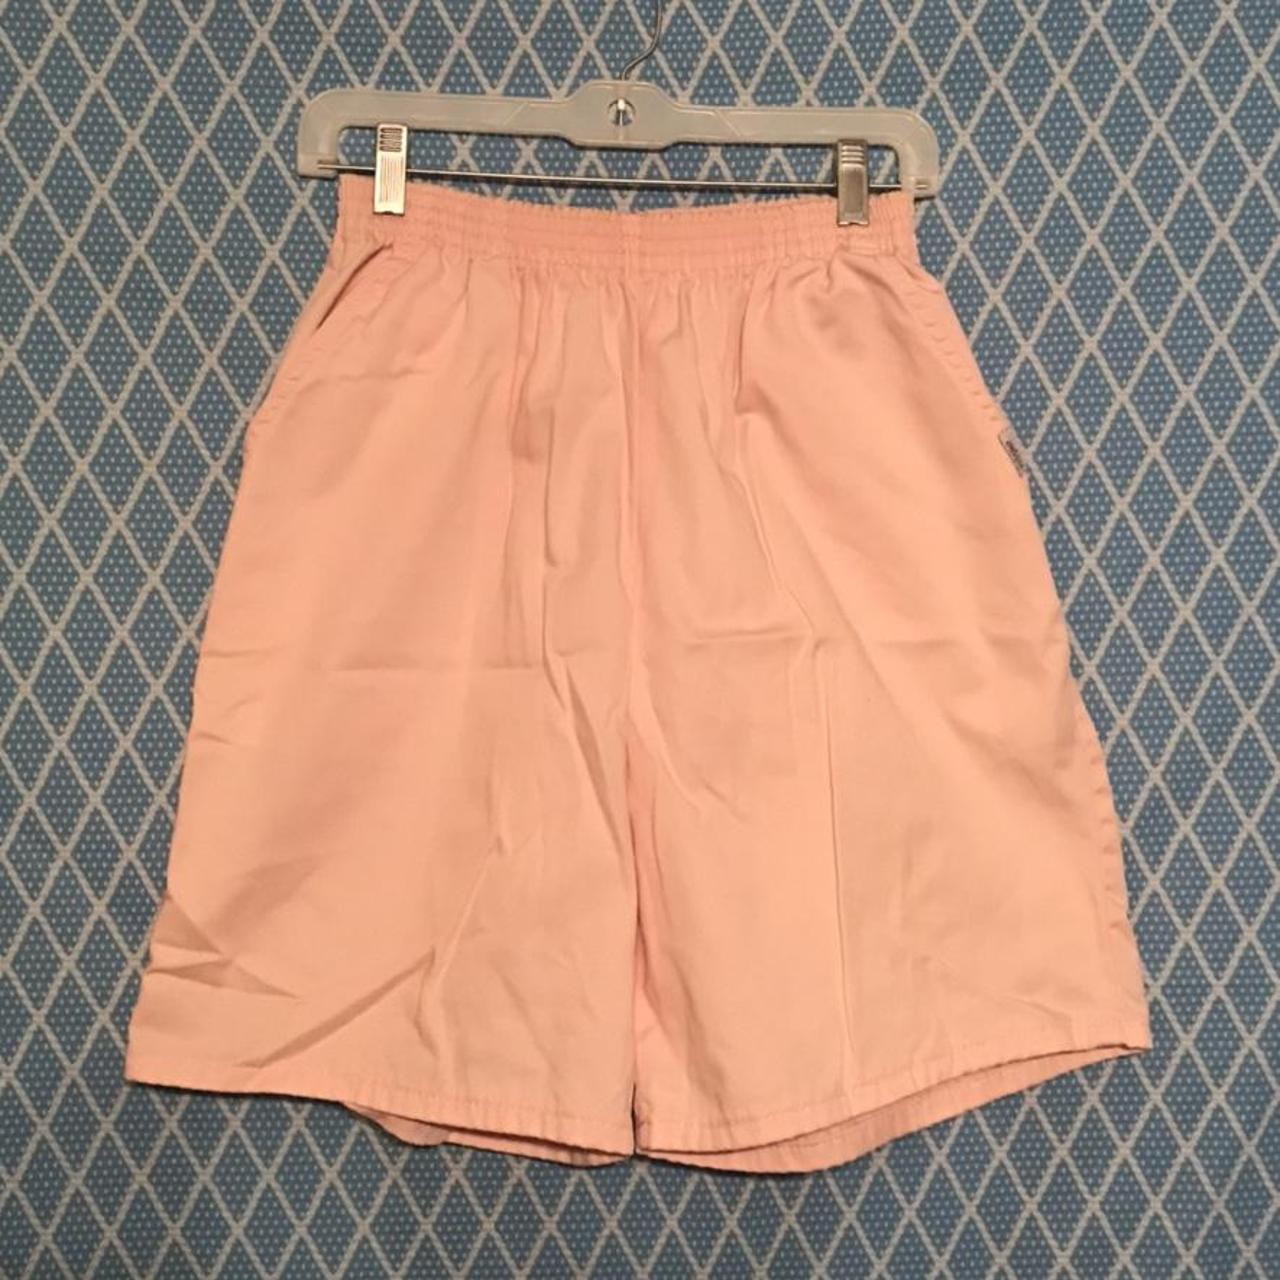 Chic Women's Pink Shorts